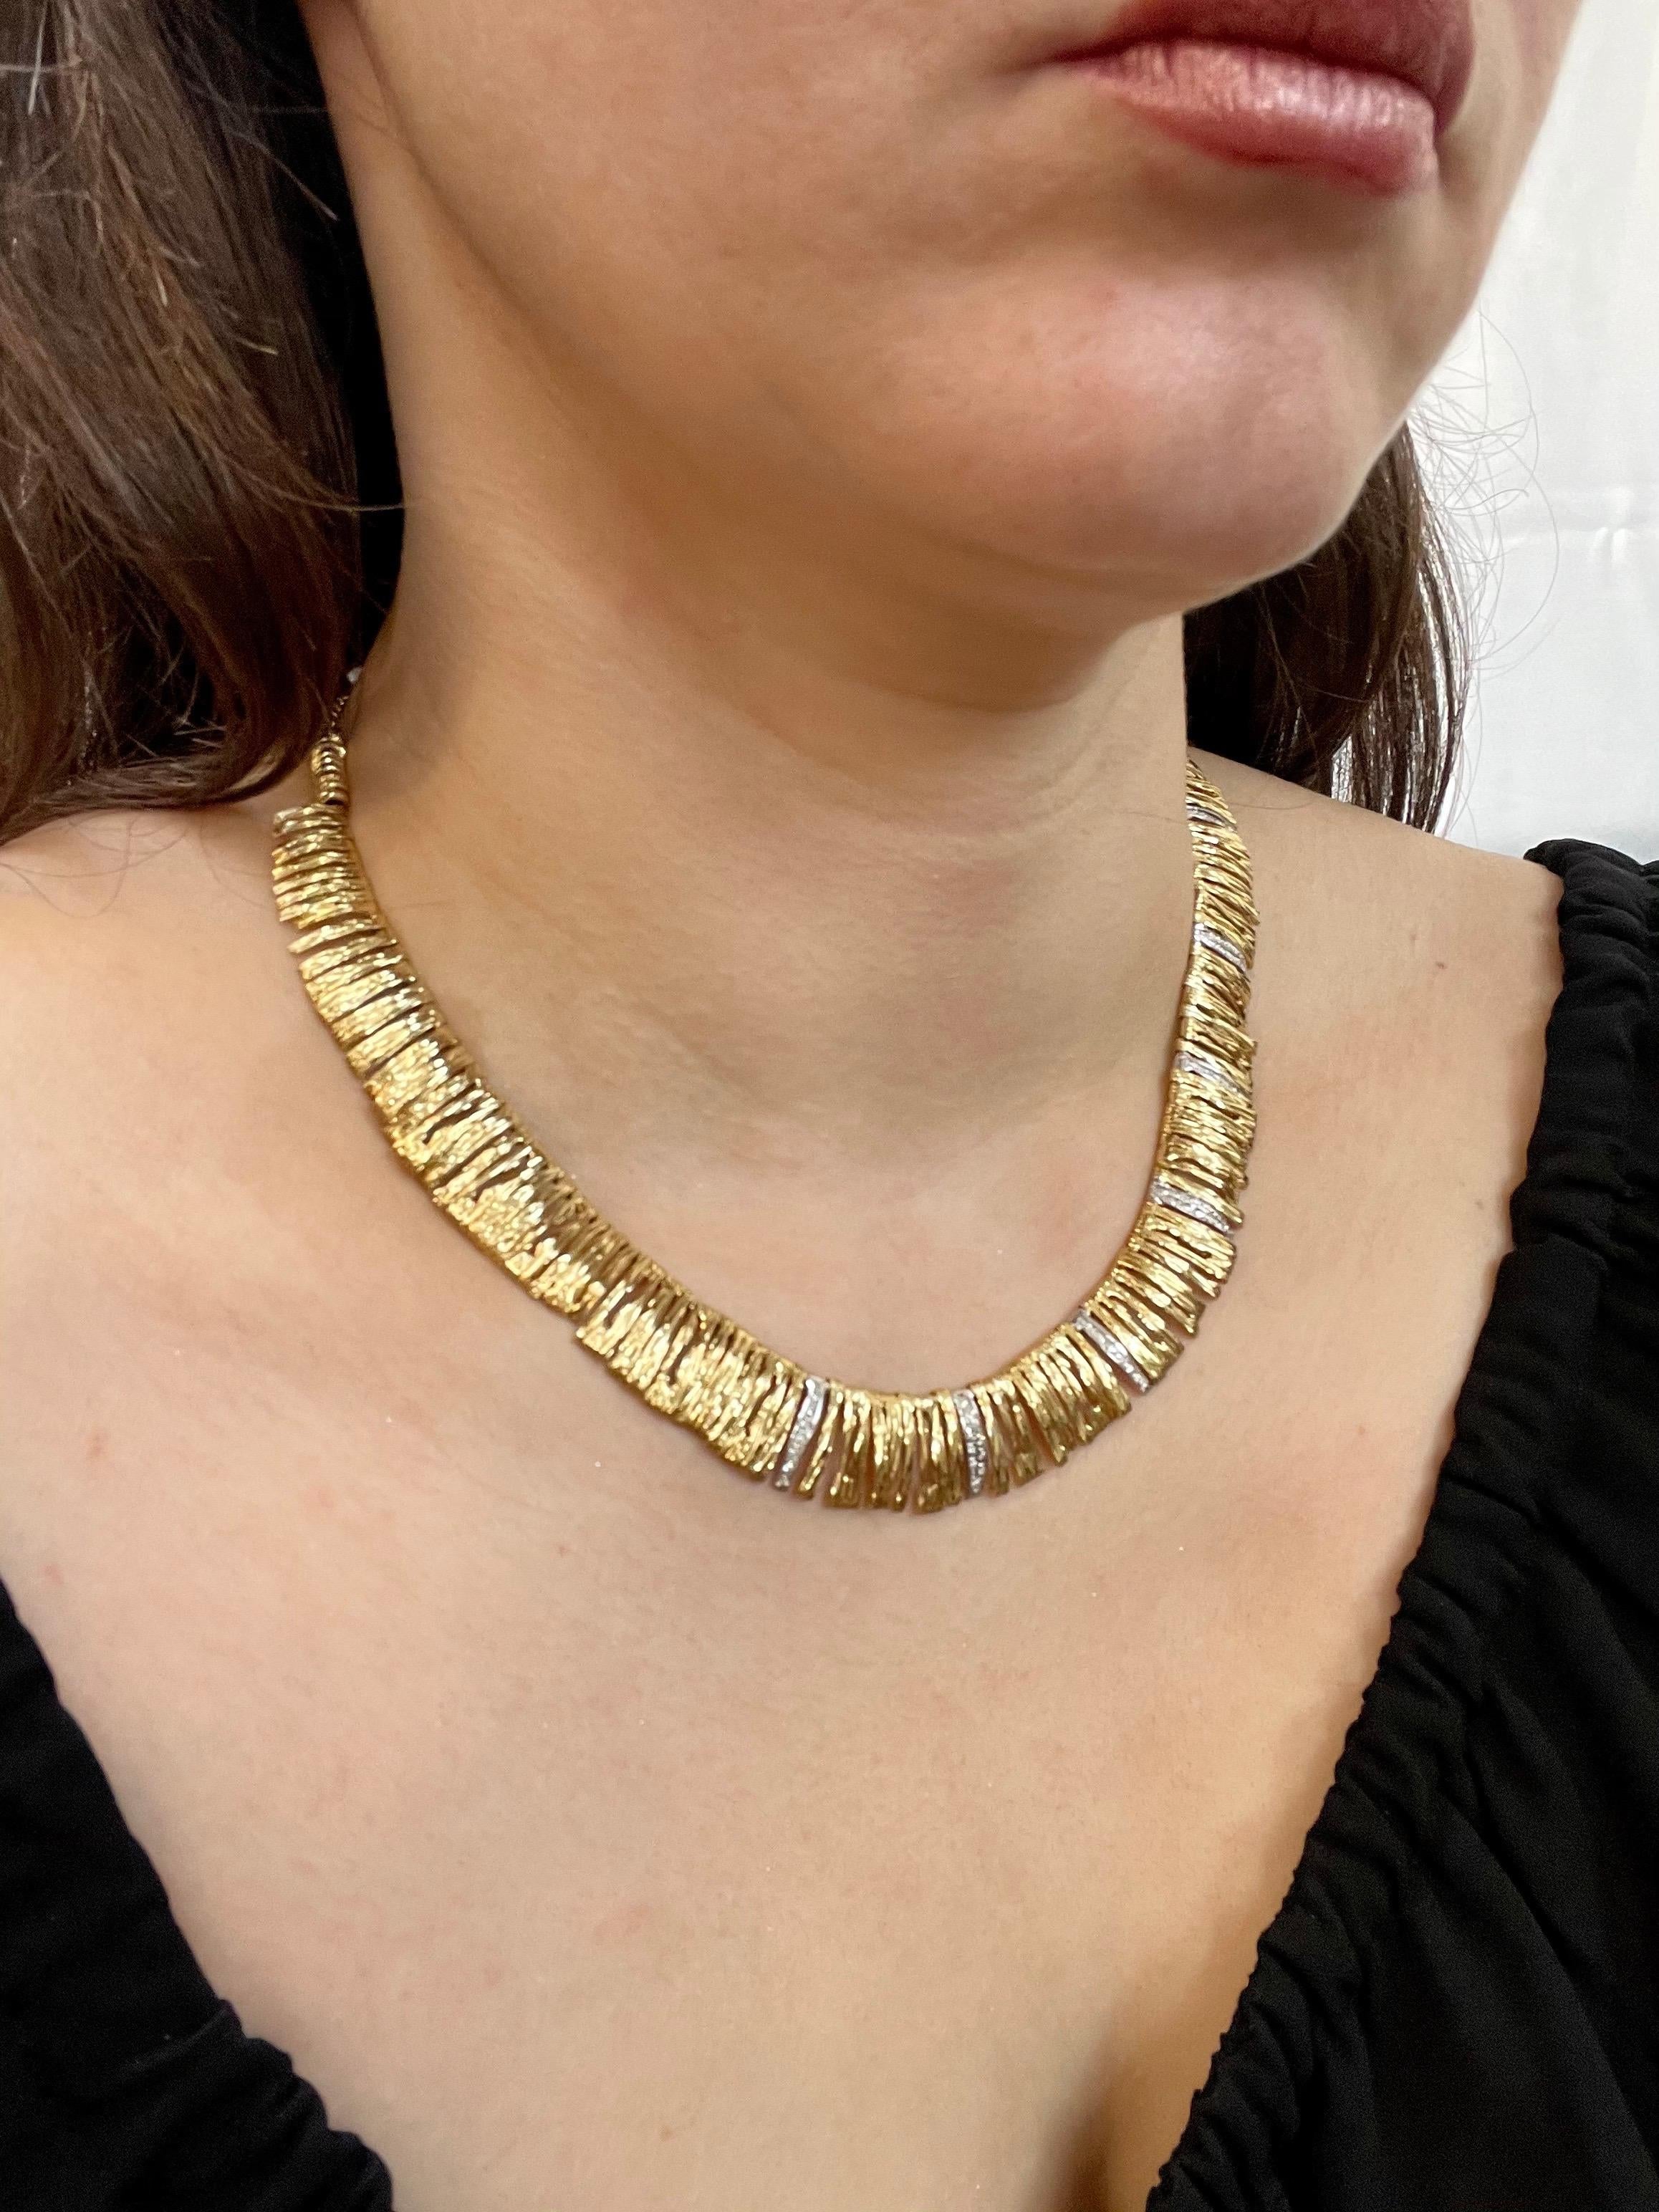 Designer Roberto Coin Diamond Elephant Skin Necklace, 18 Karat Gold 53 Grams For Sale 3